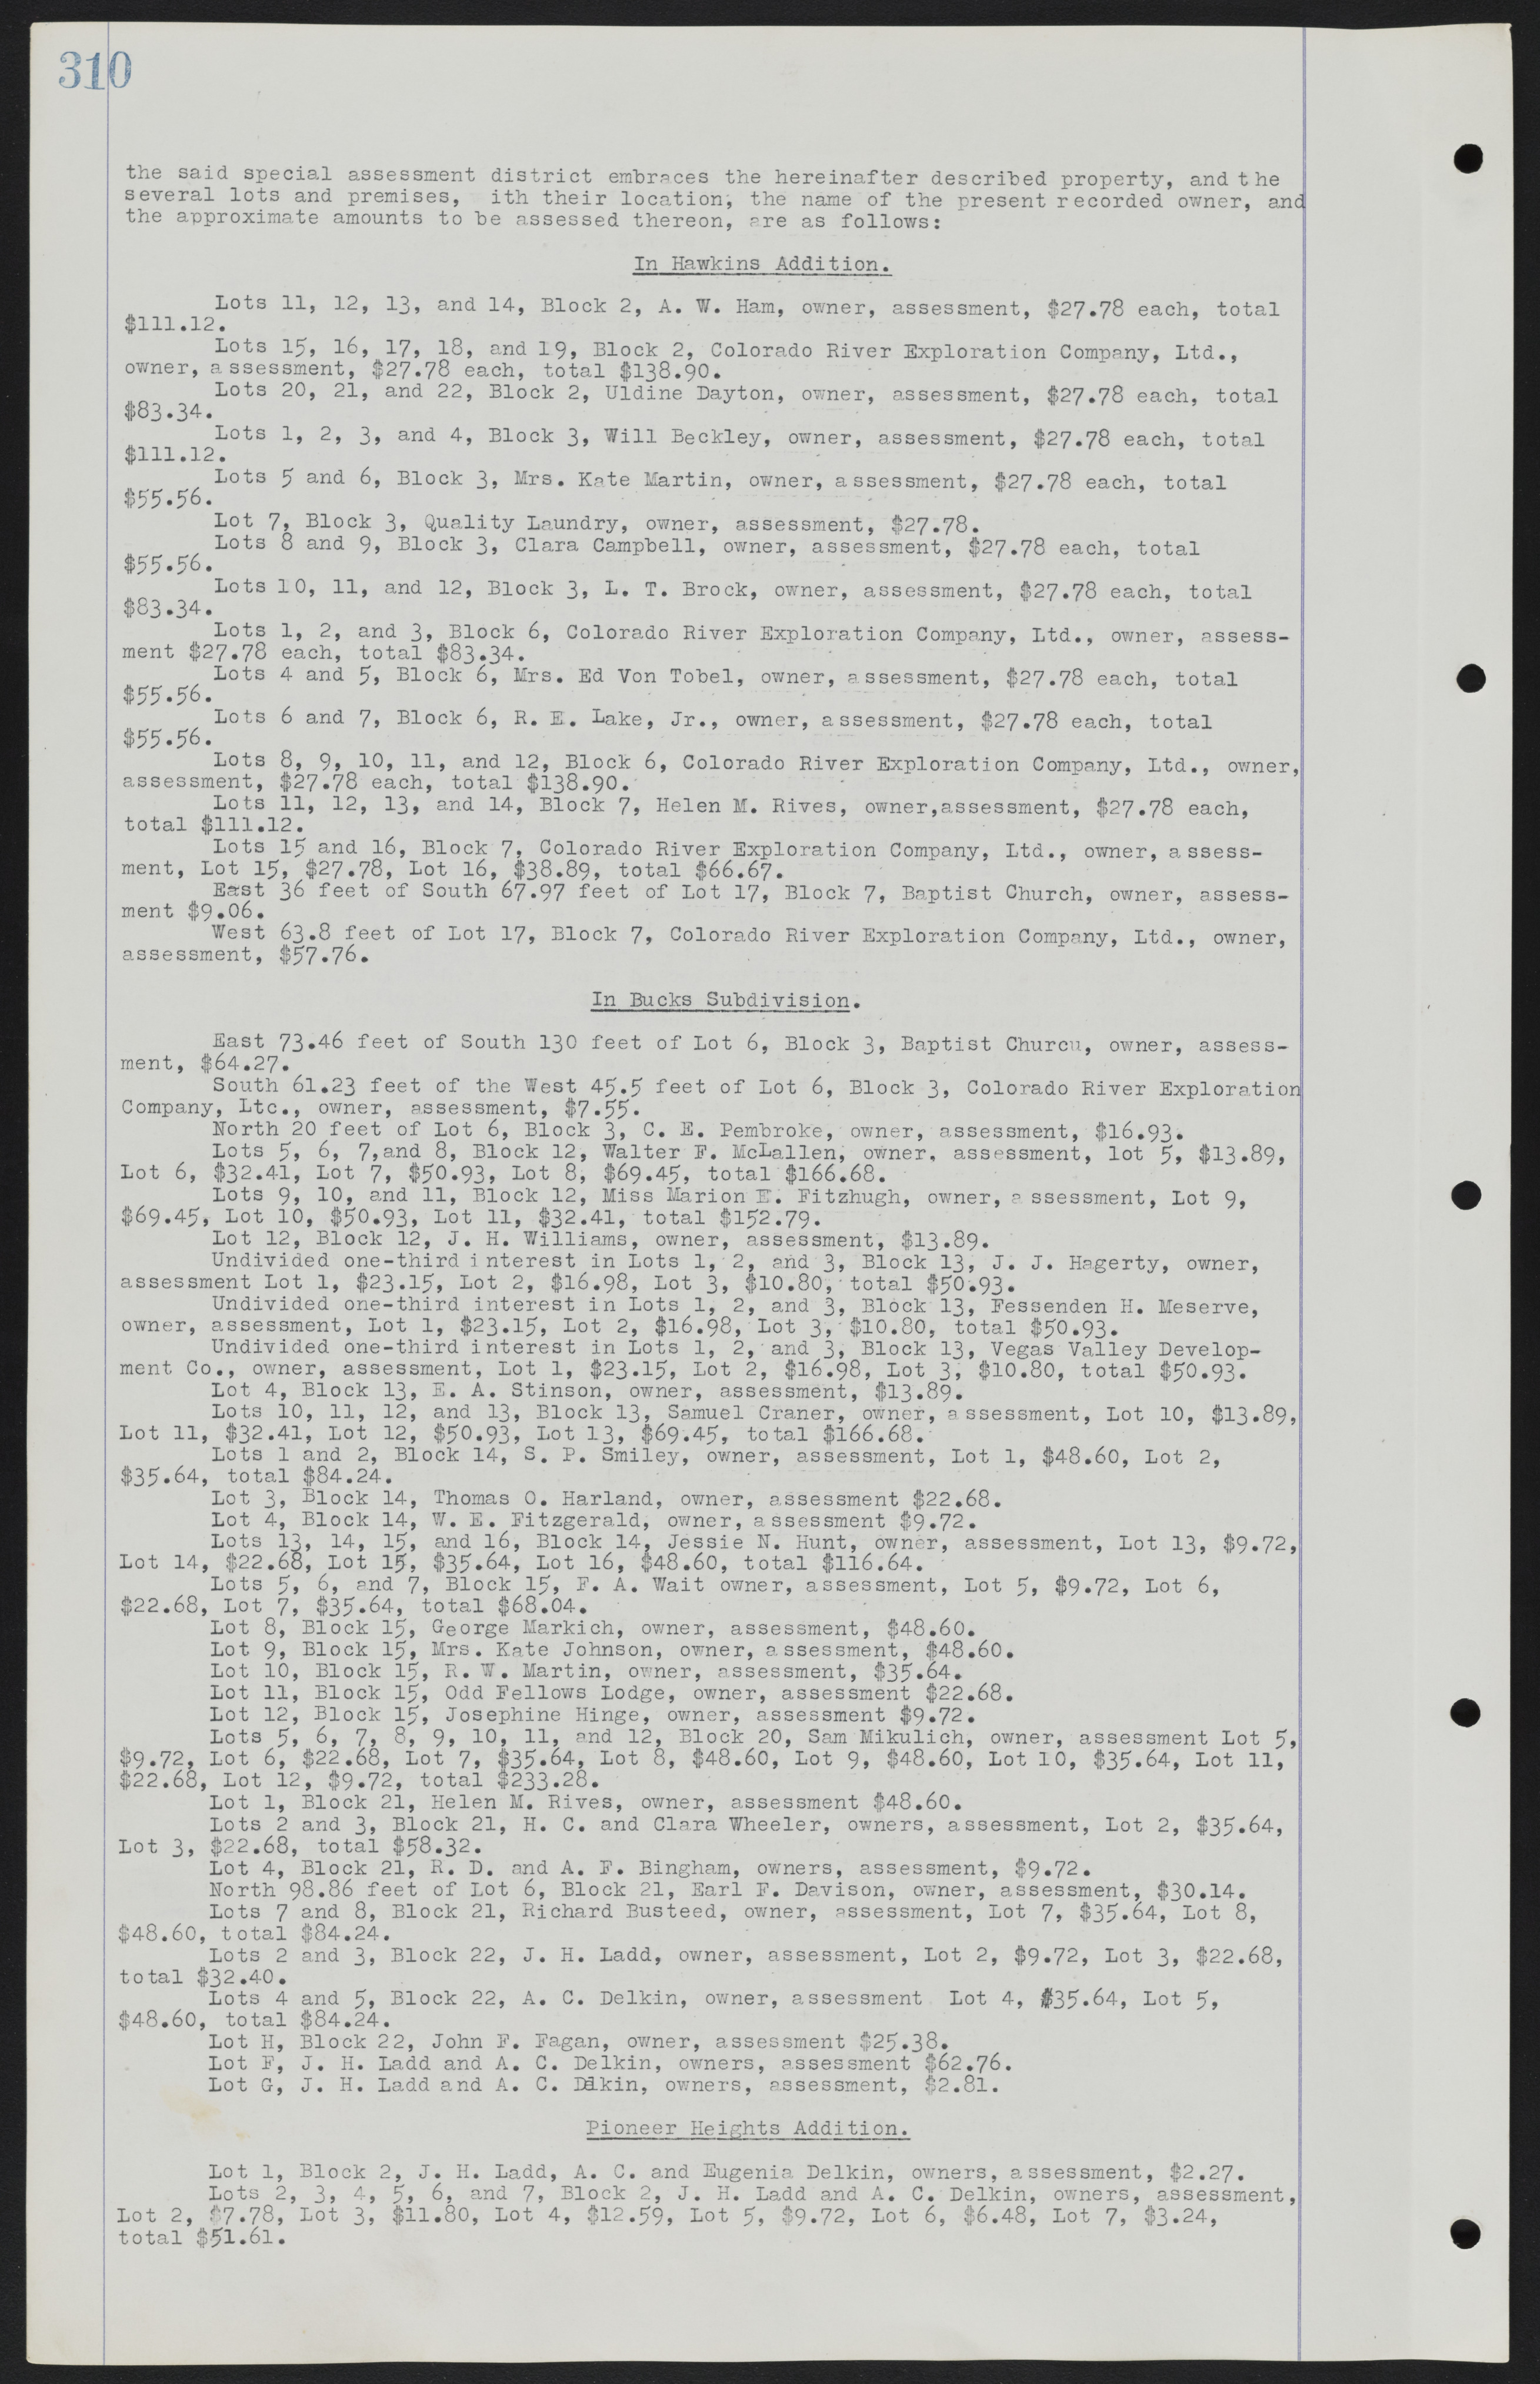 Las Vegas City Ordinances, July 18, 1911 to March 31, 1933, lvc000013-314